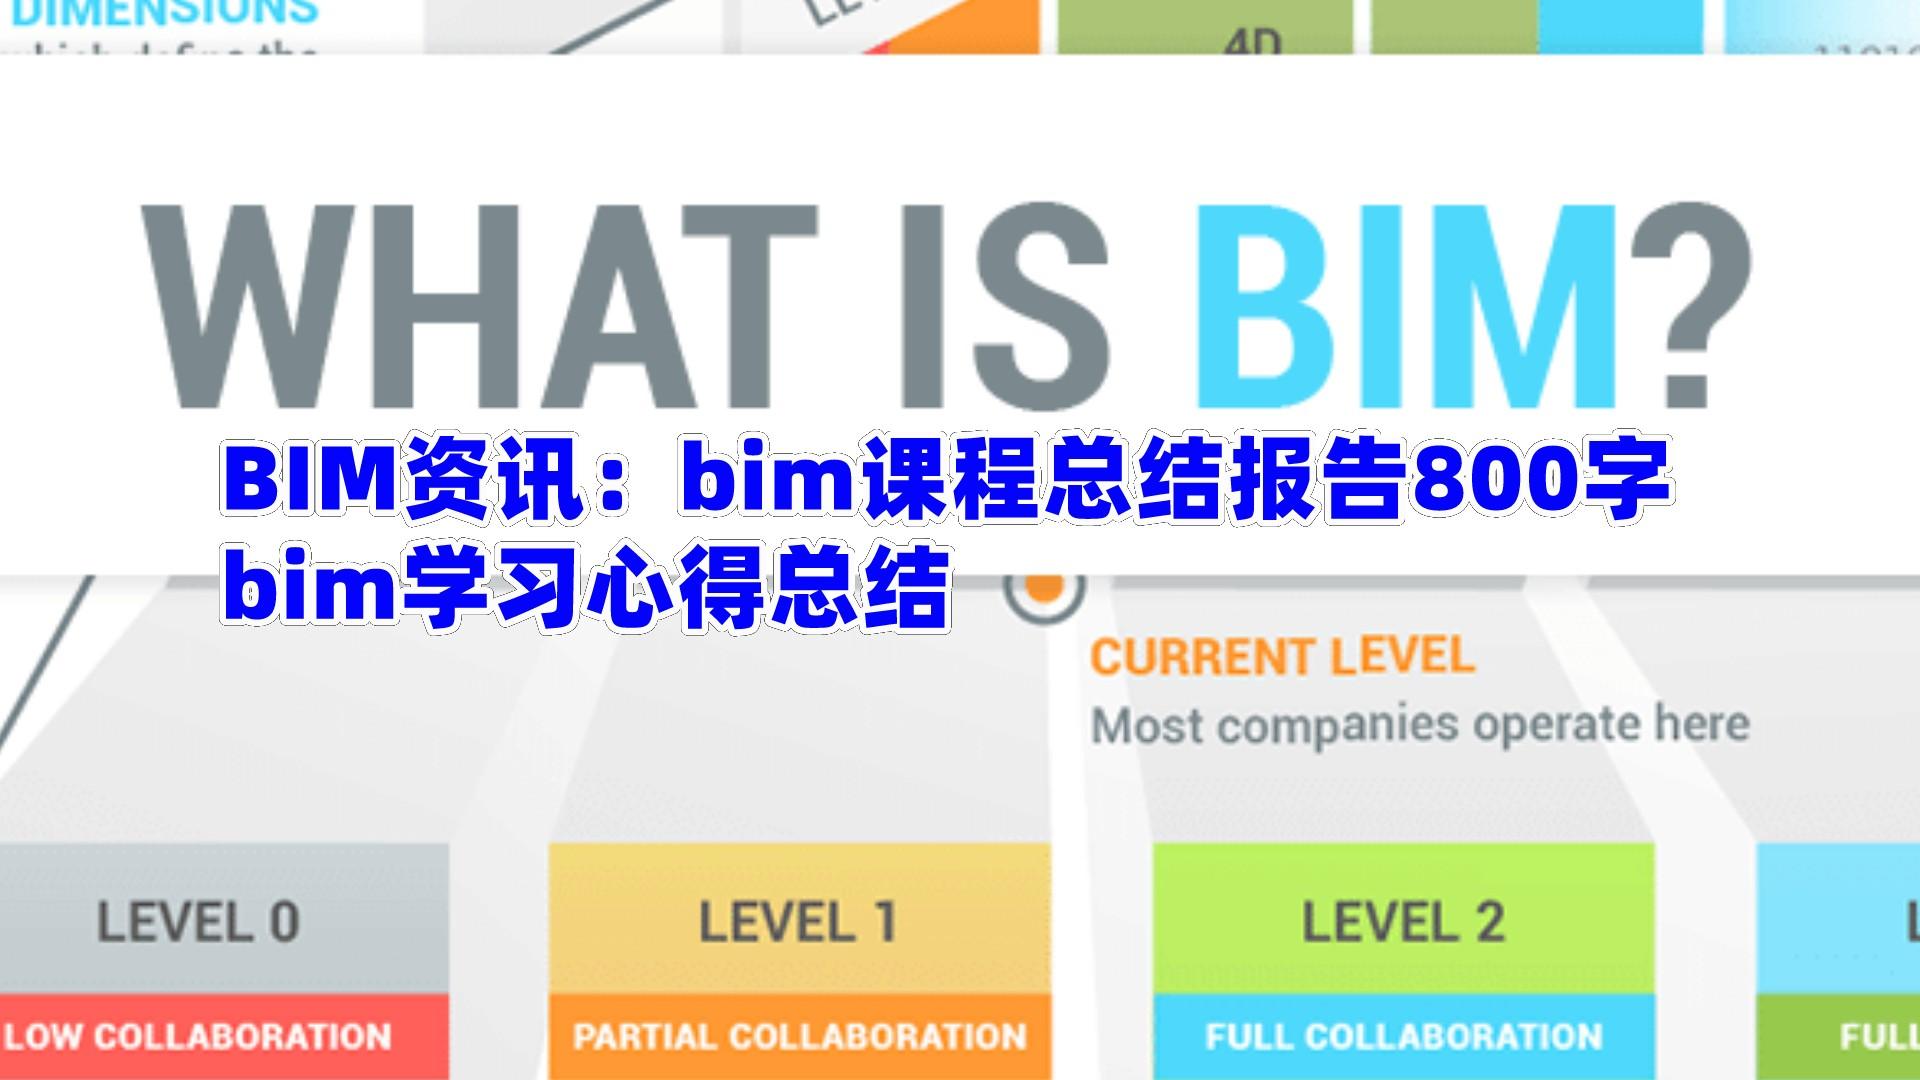 【BIM资讯】bim课程总结报告800字，bim学习心得总结